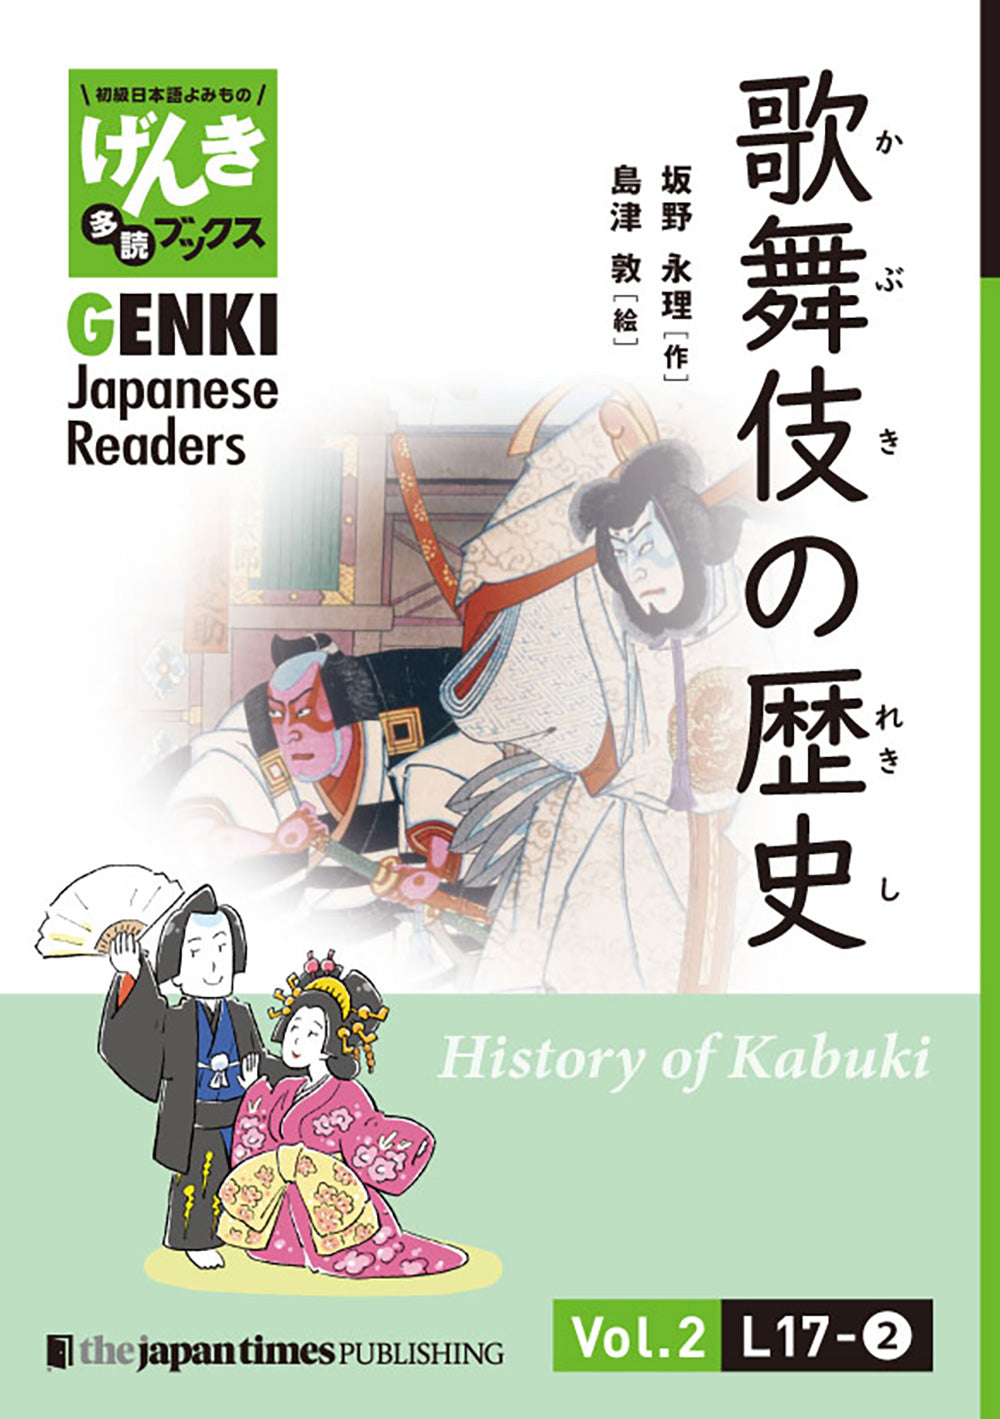 GENKI Japanese Readers Box 3 (L13-L18)